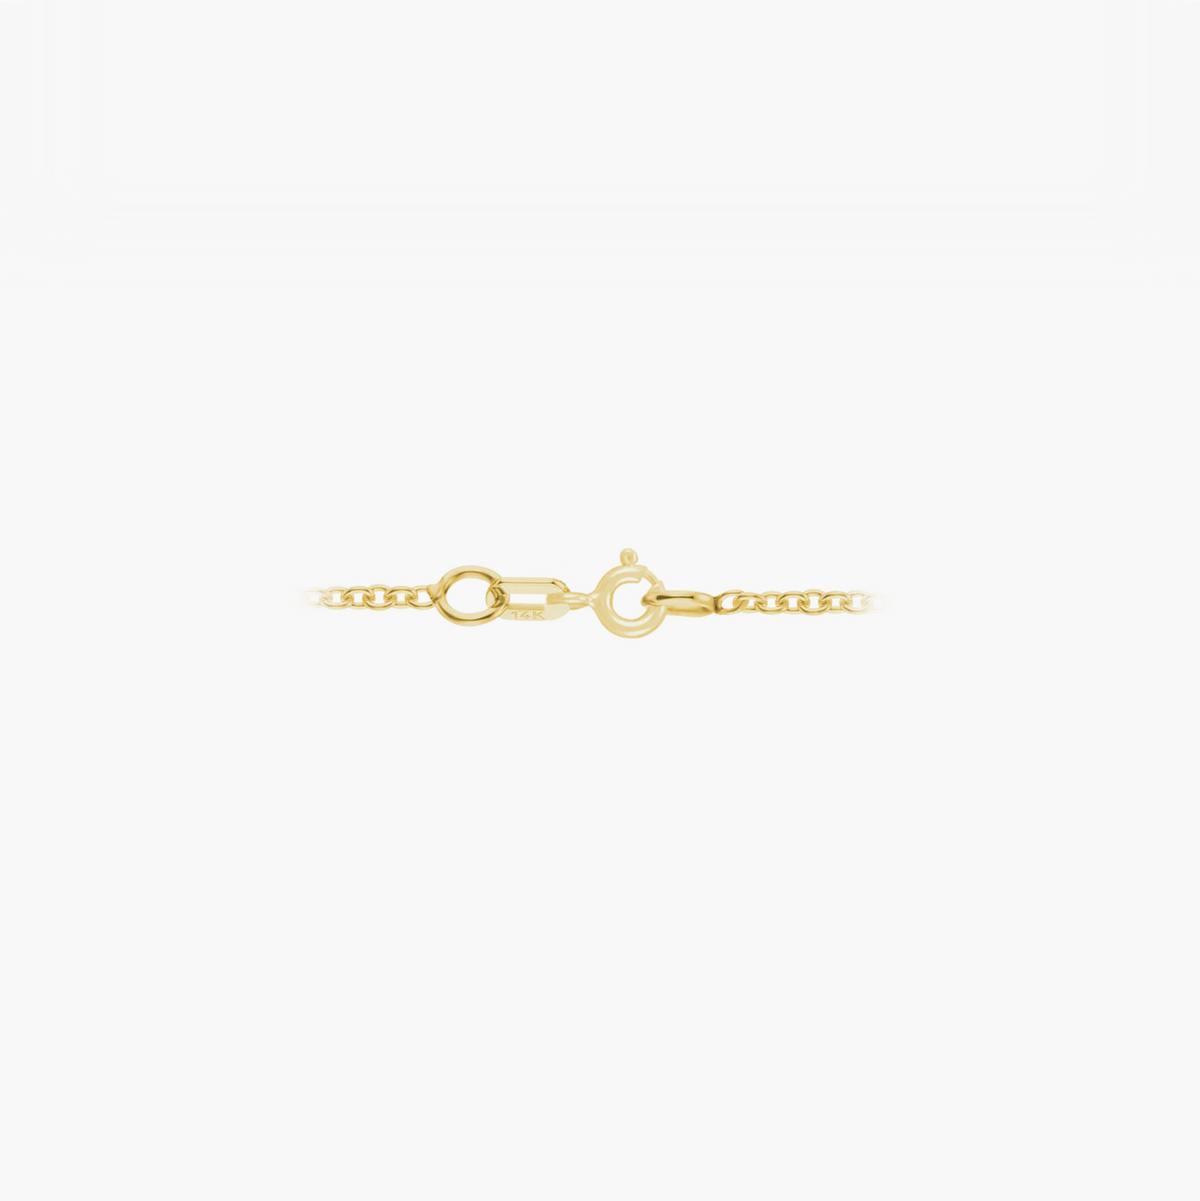 Birthstone Necklace September- Sapphire 14K Gold Necklace